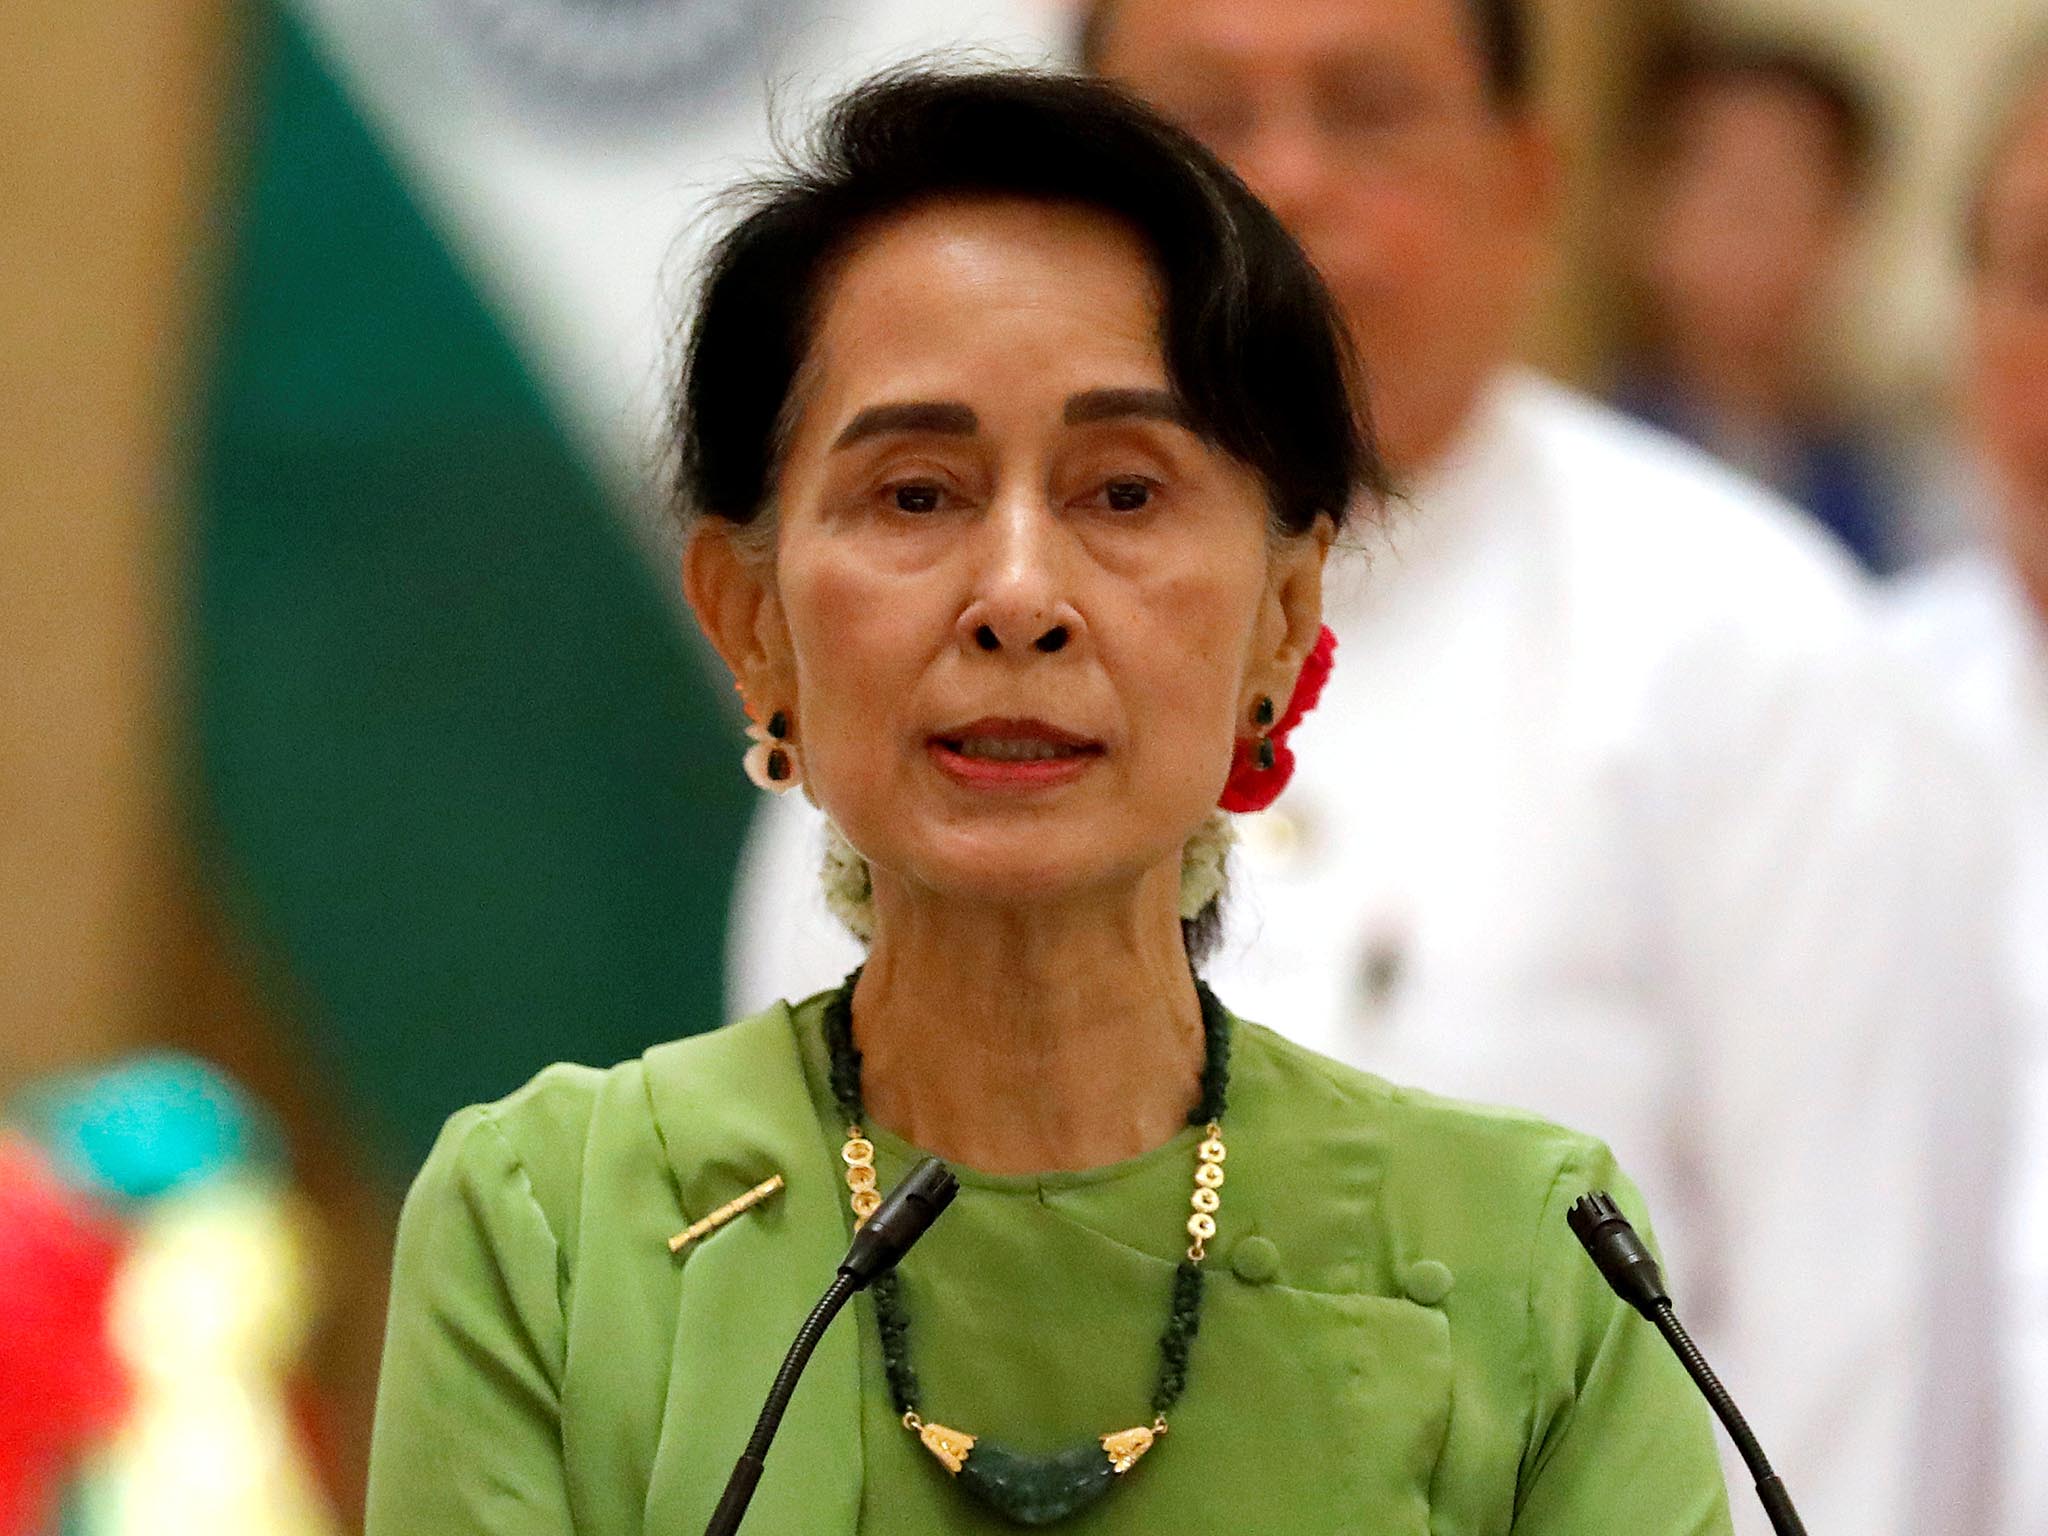 Aung San Suu Kyi has faced widespread criticism over attacks on Burma's Rohingya minority